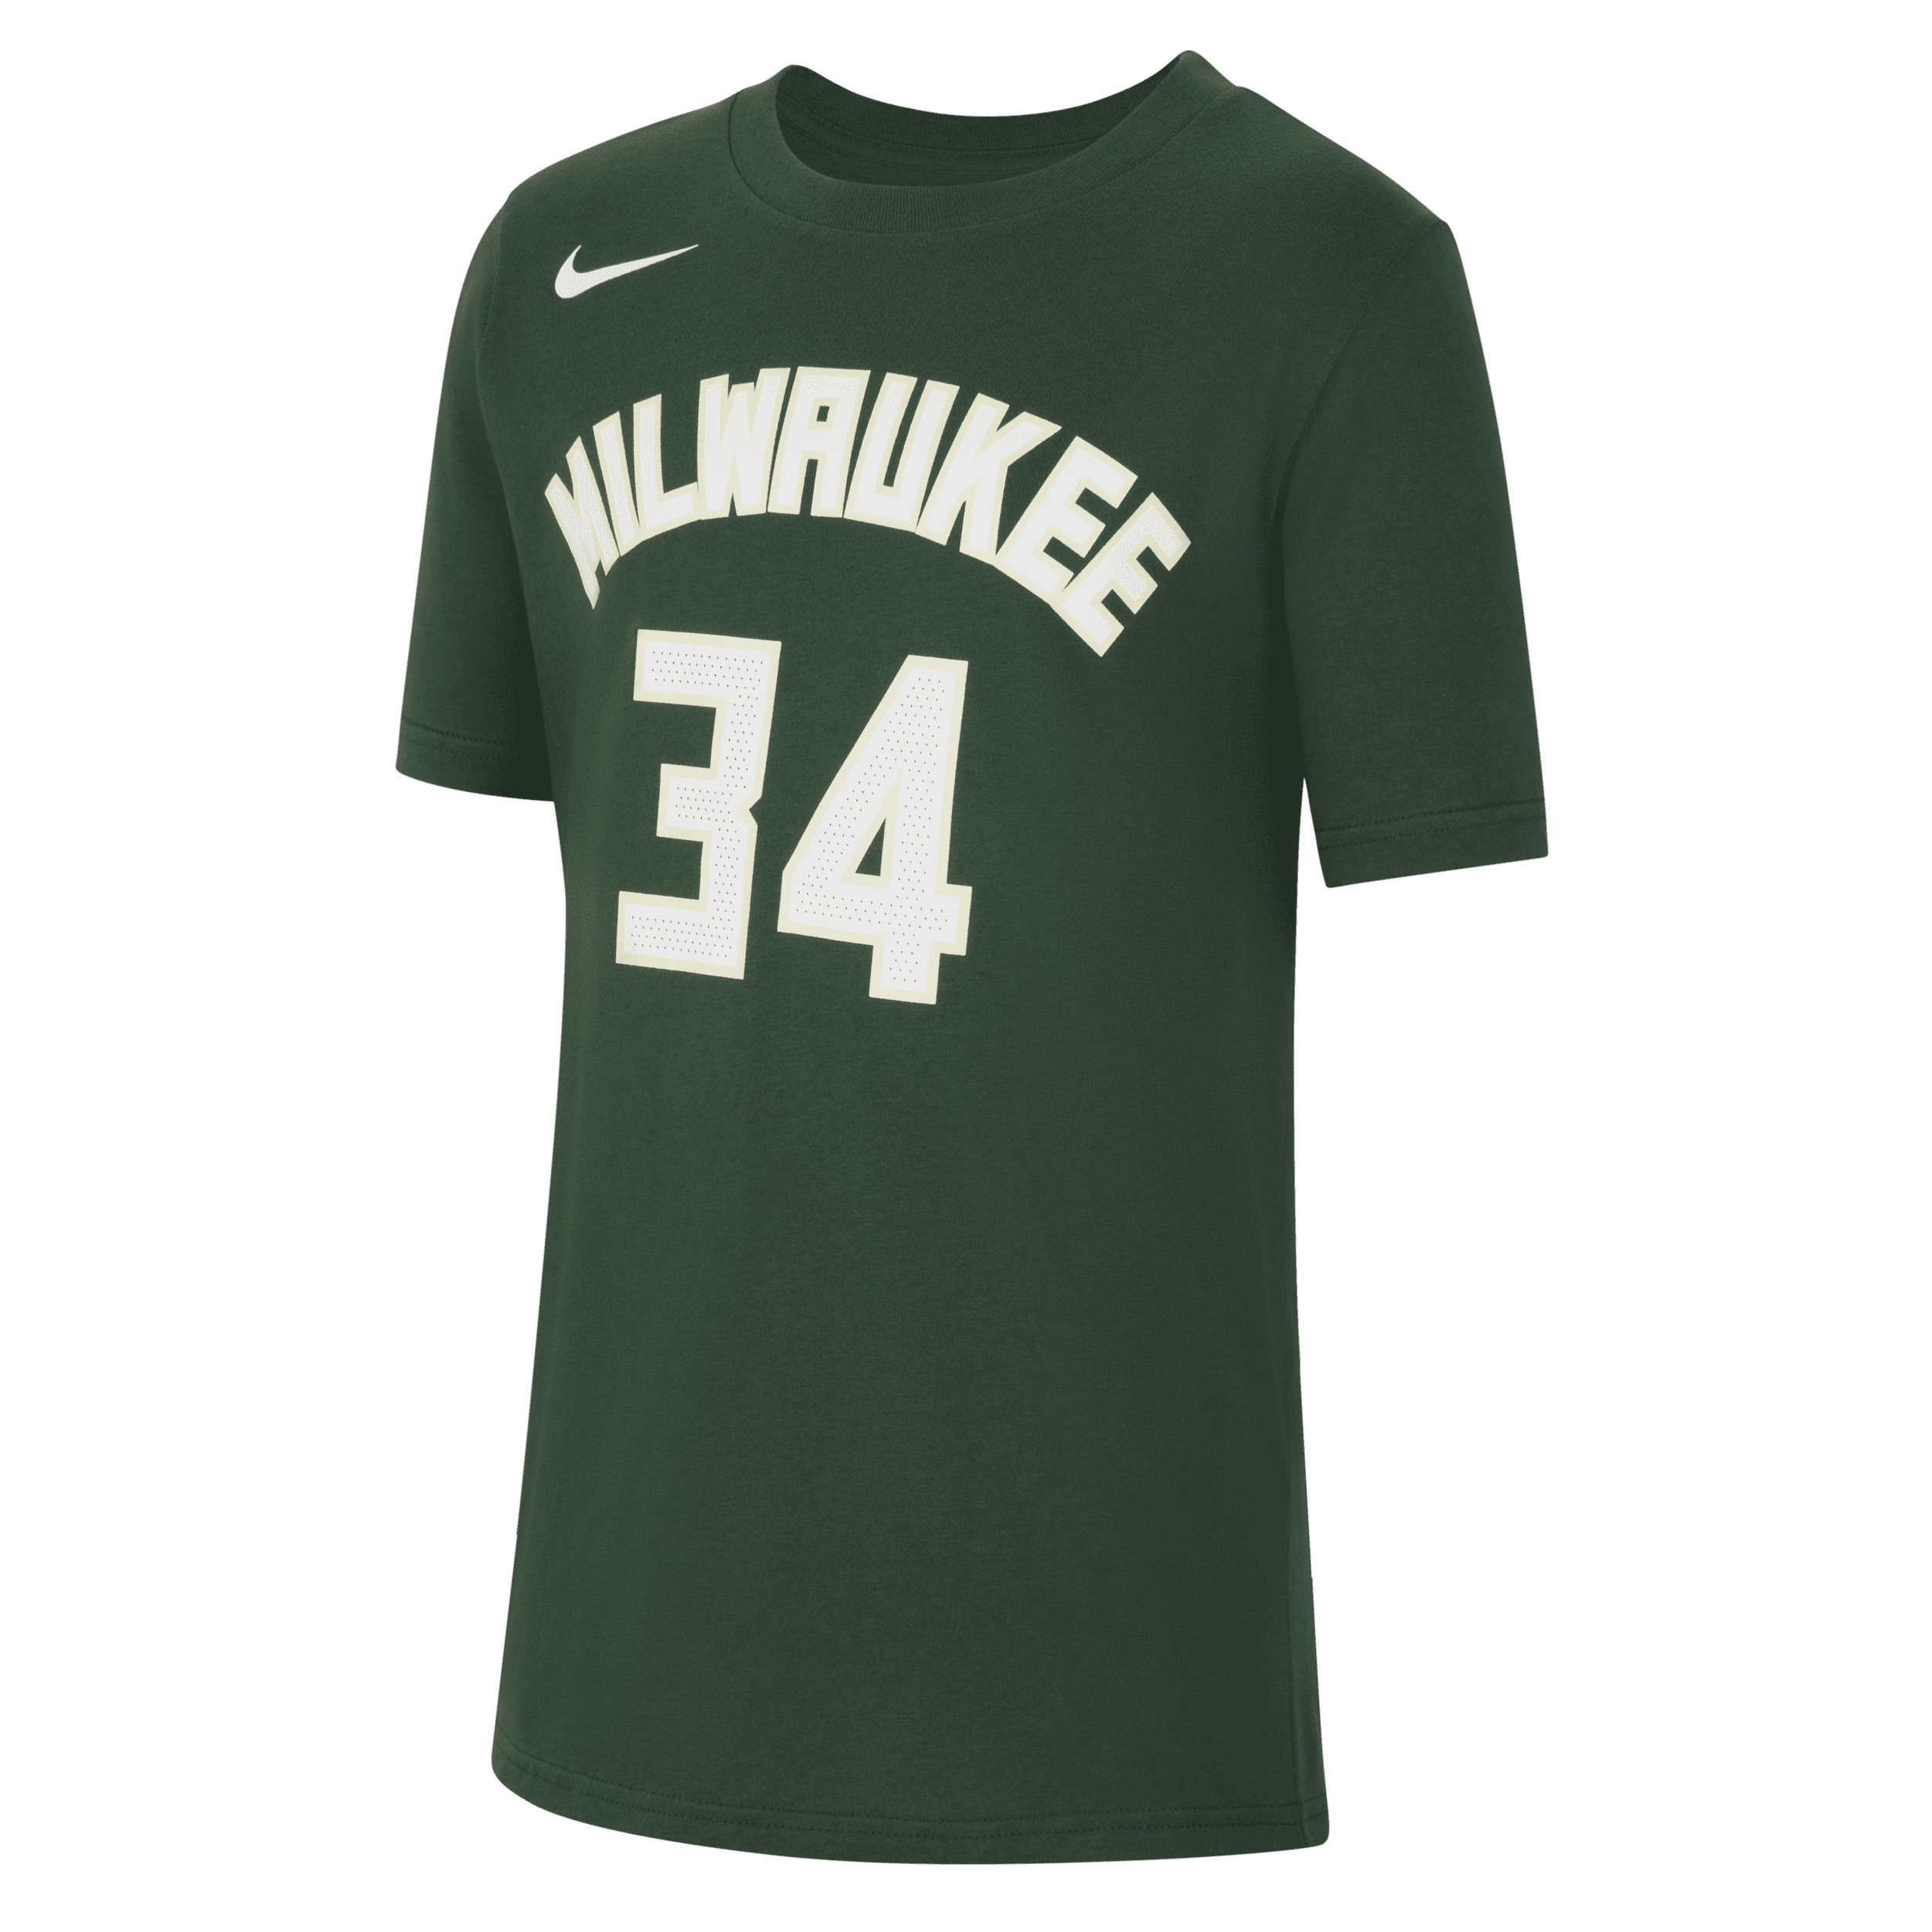 Milwaukee Bucks Nike NBA-shirt voor kids - Groen